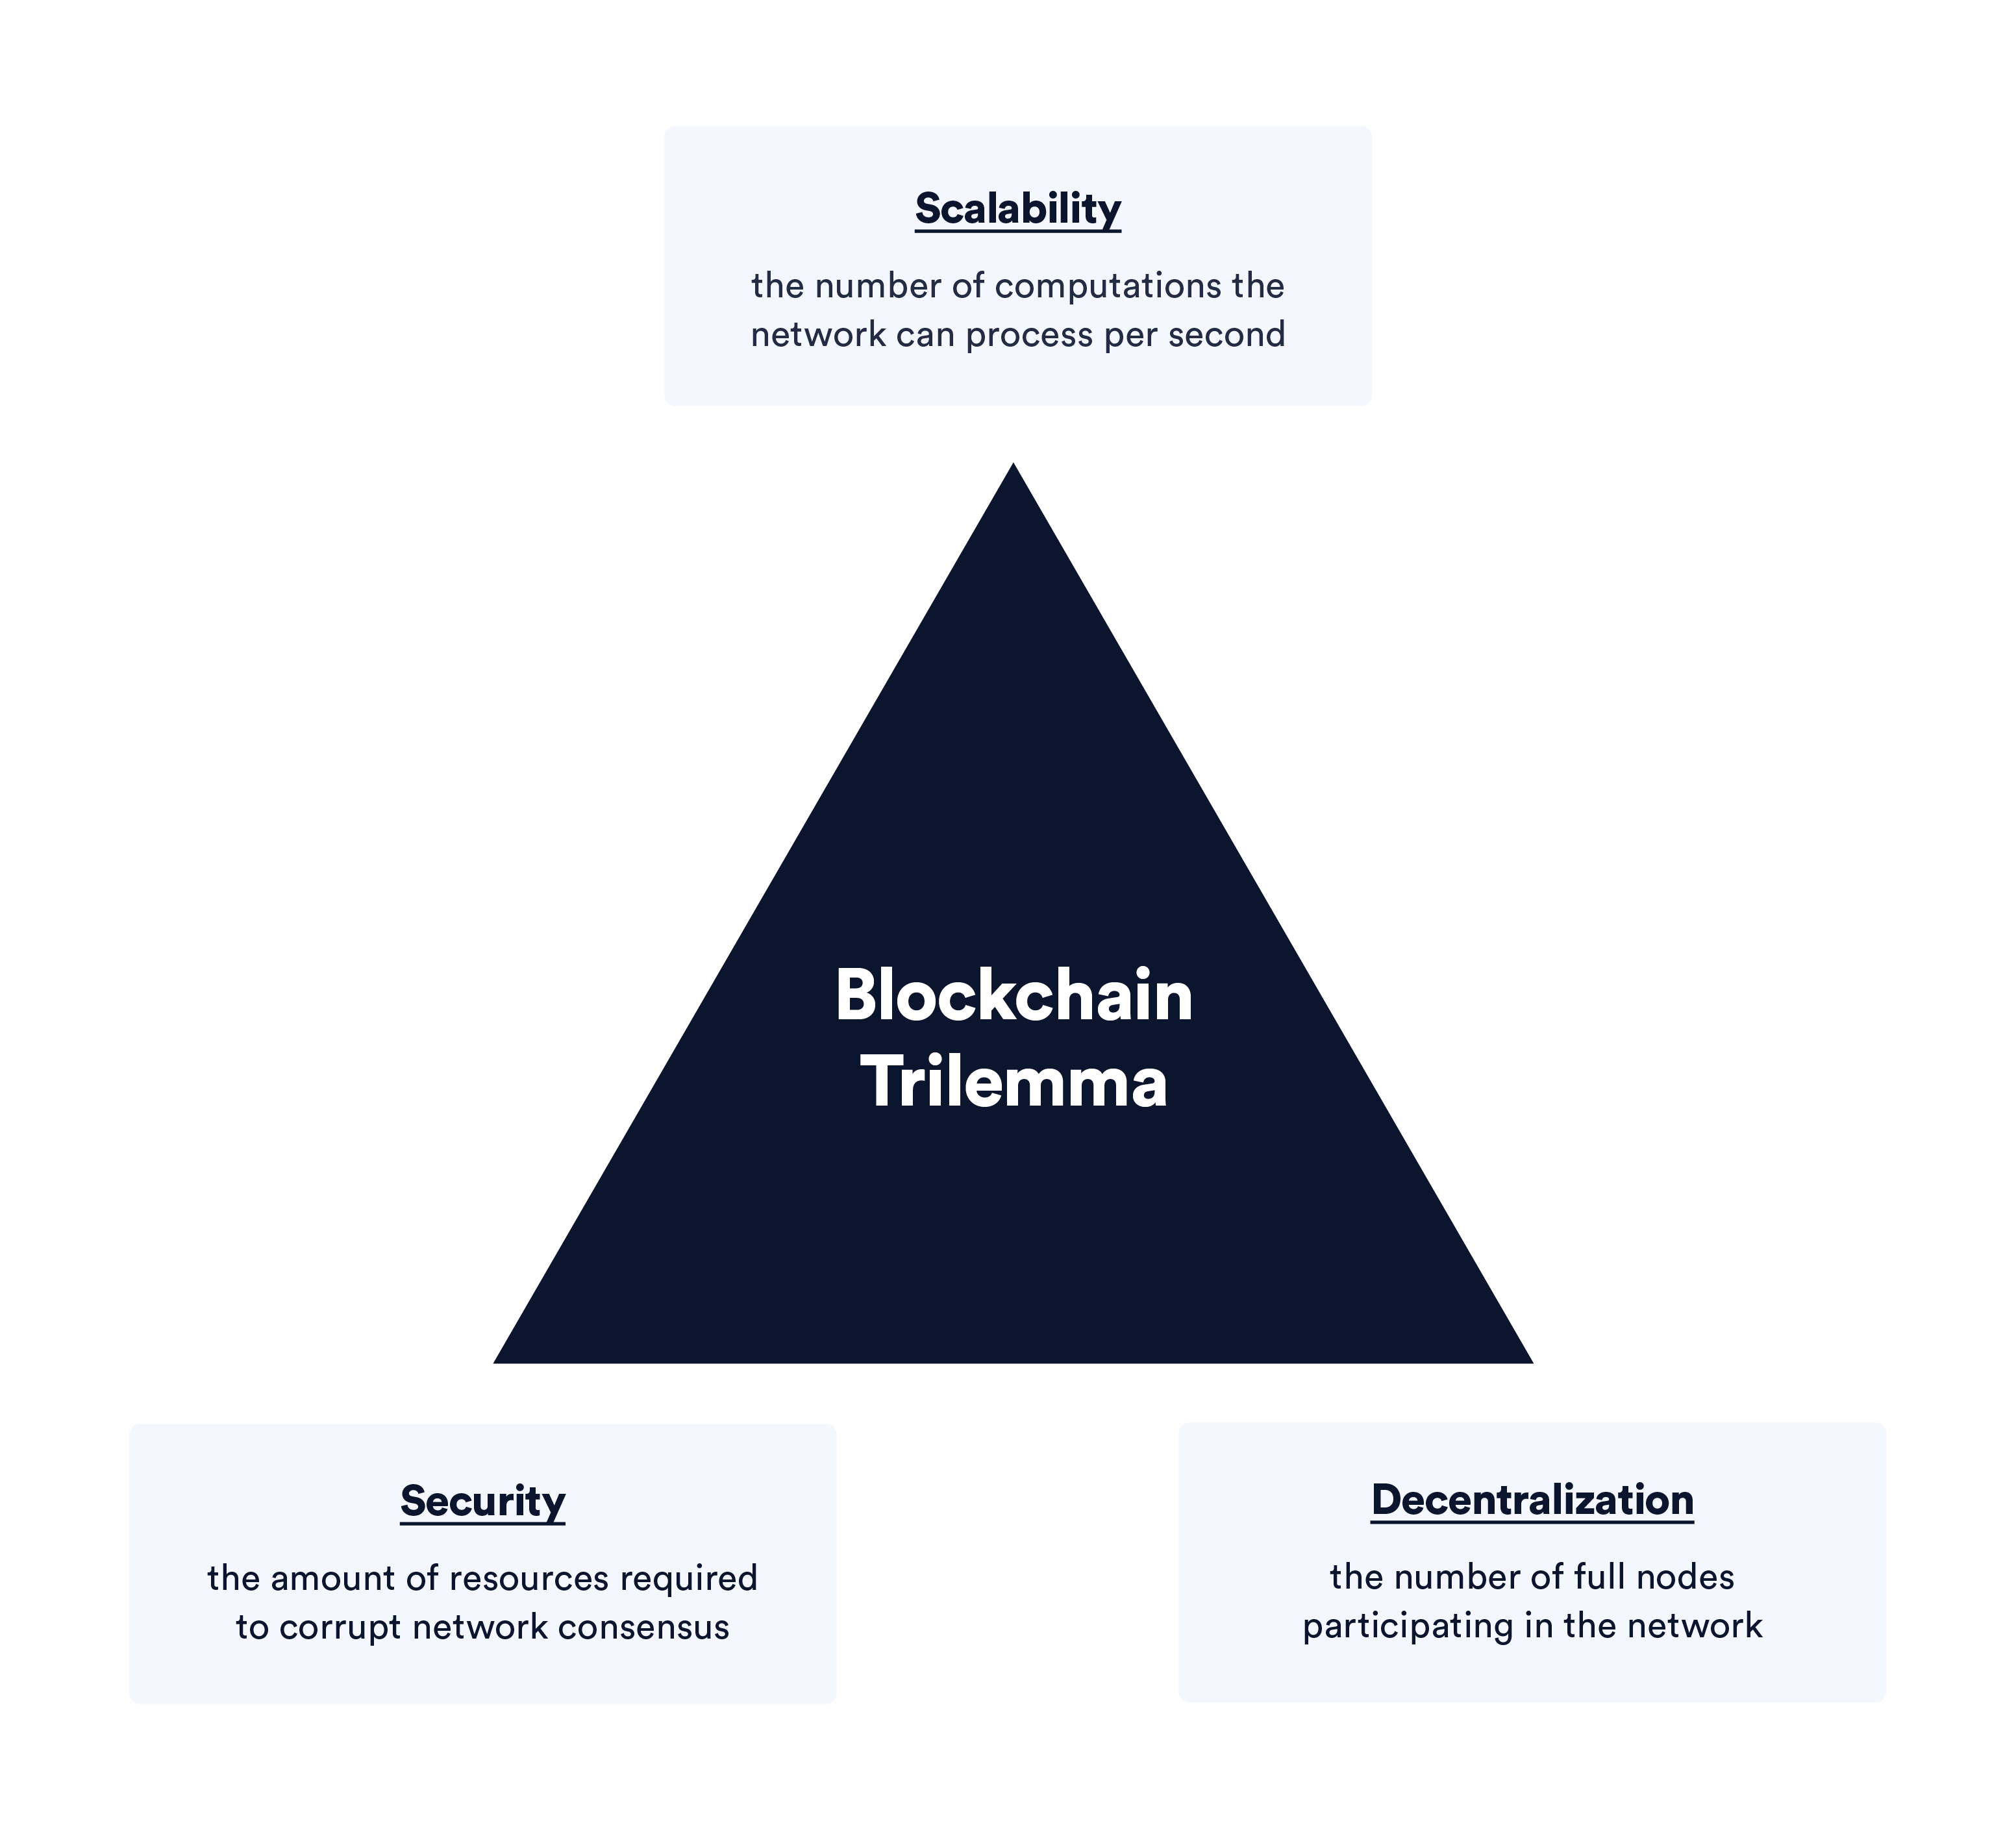 Blockchain scalabilit trilemma